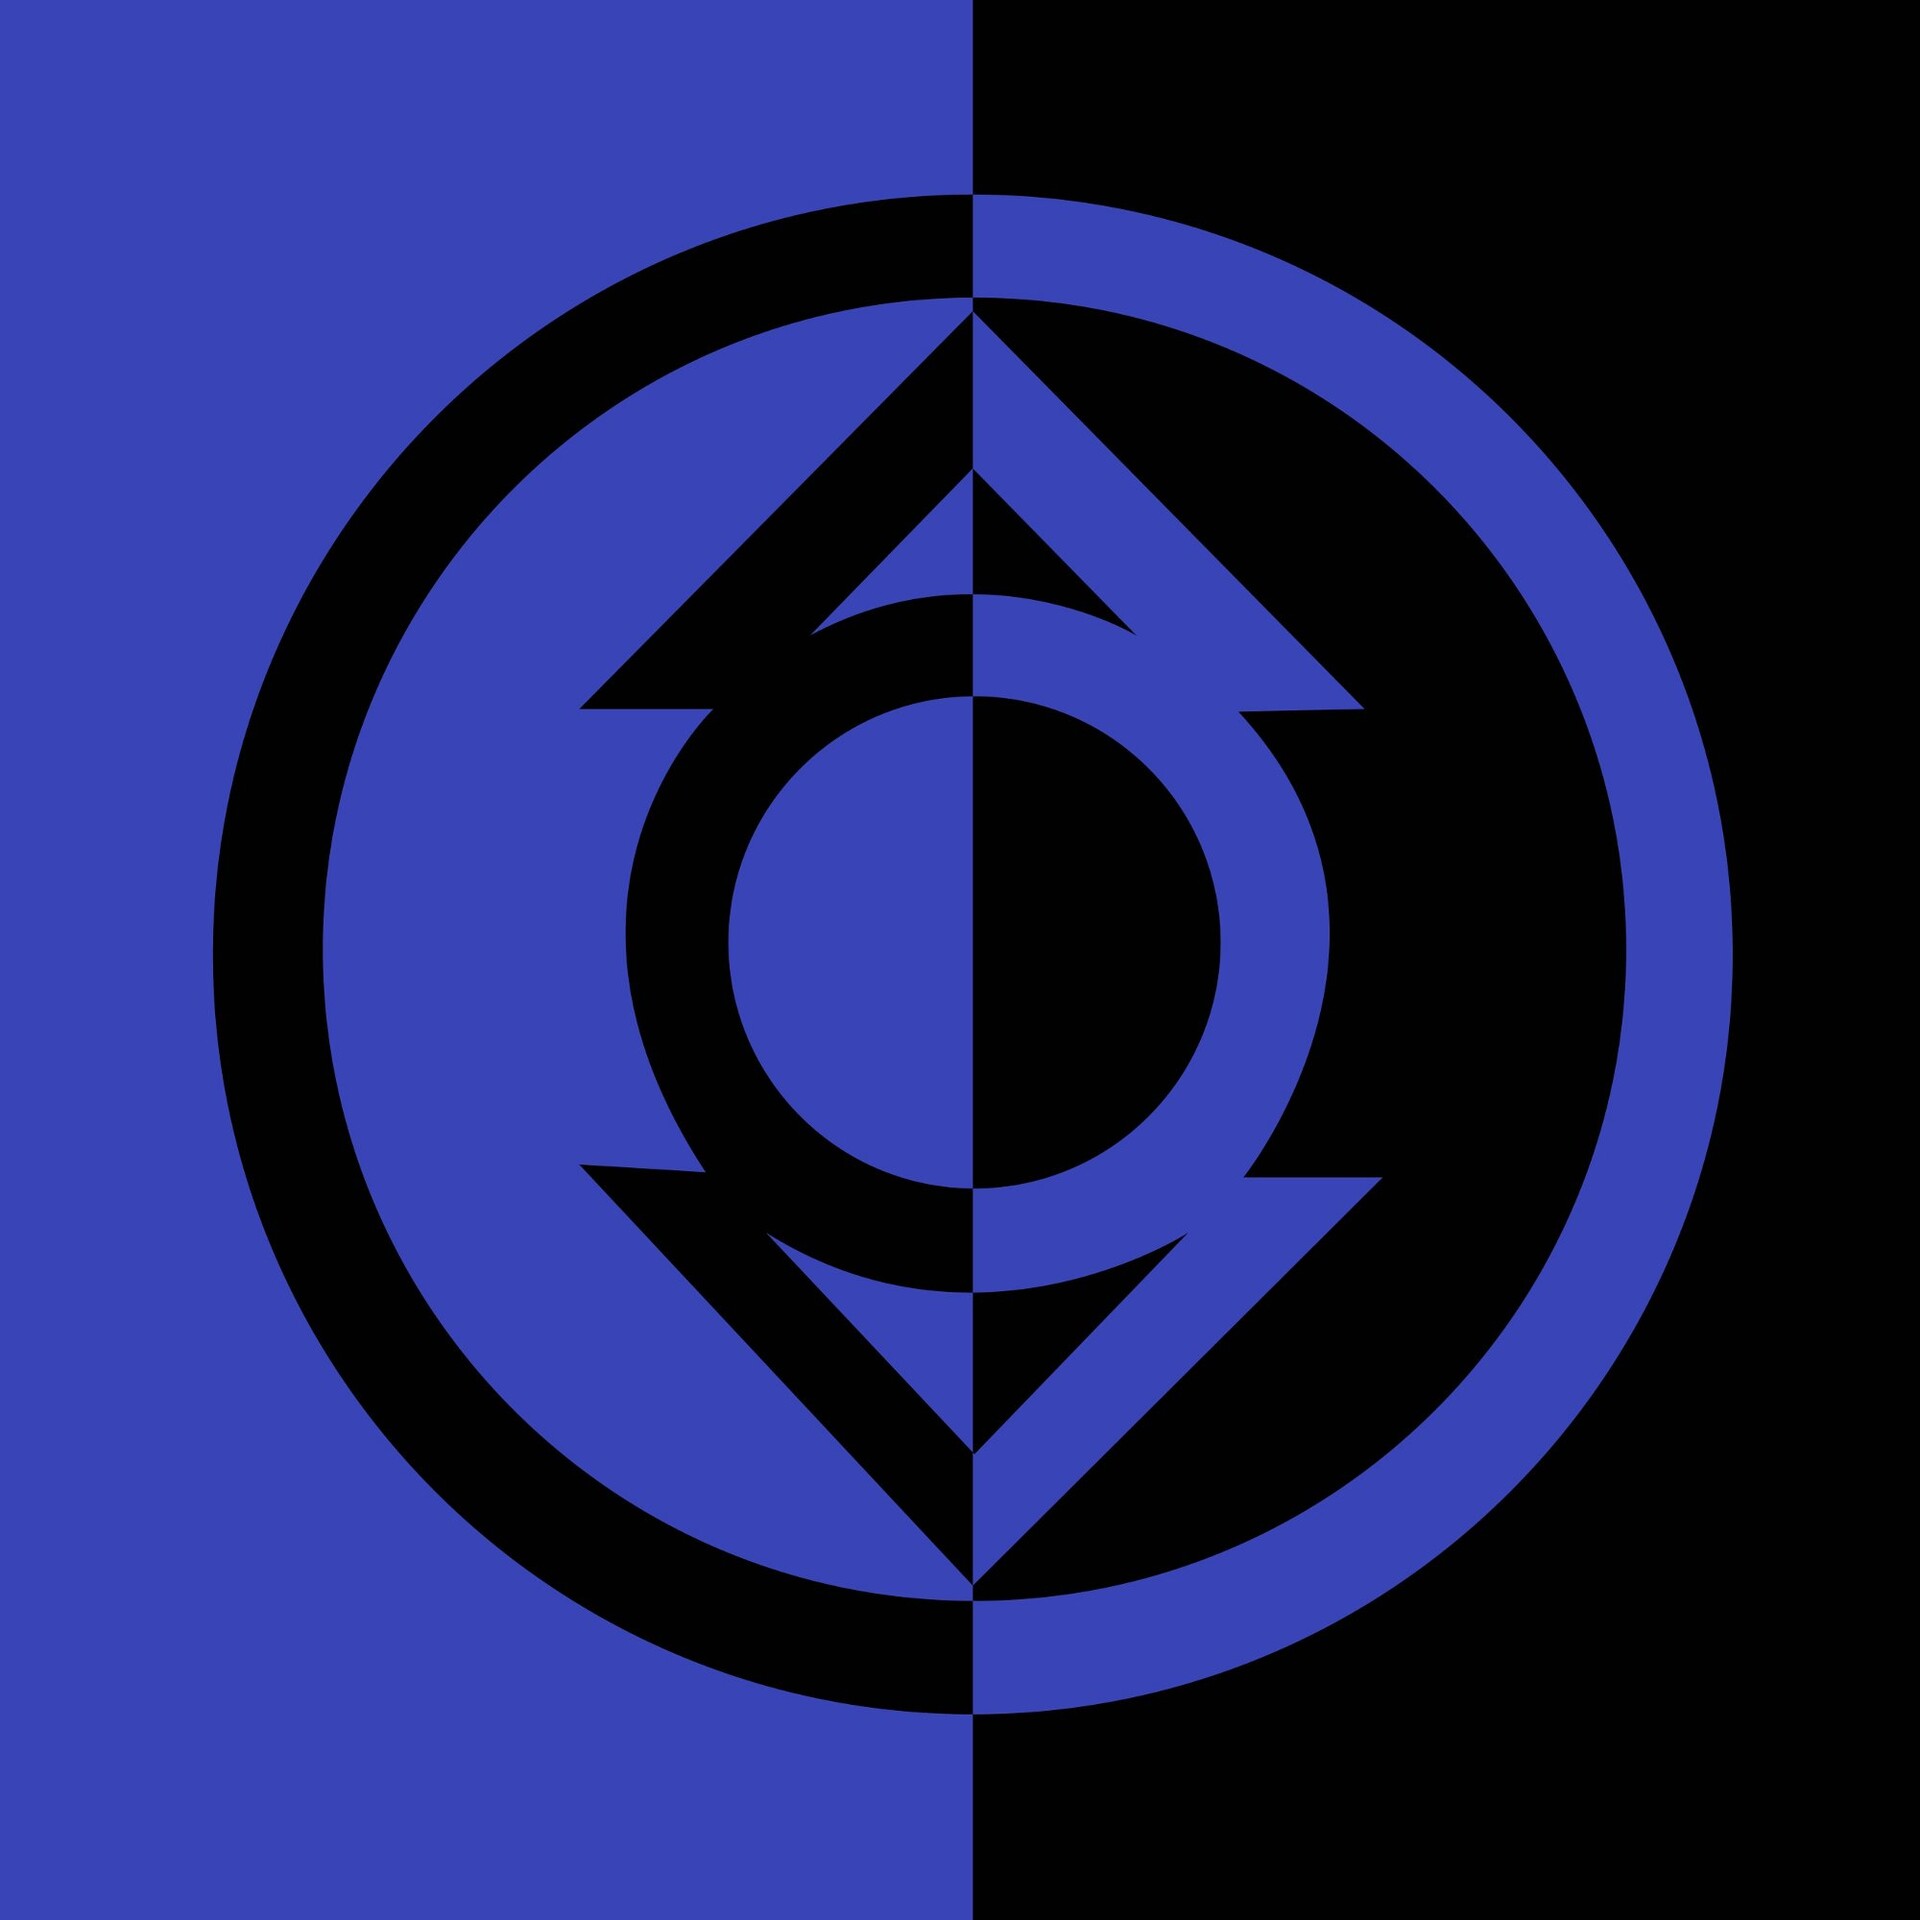 indigo lantern corps symbol